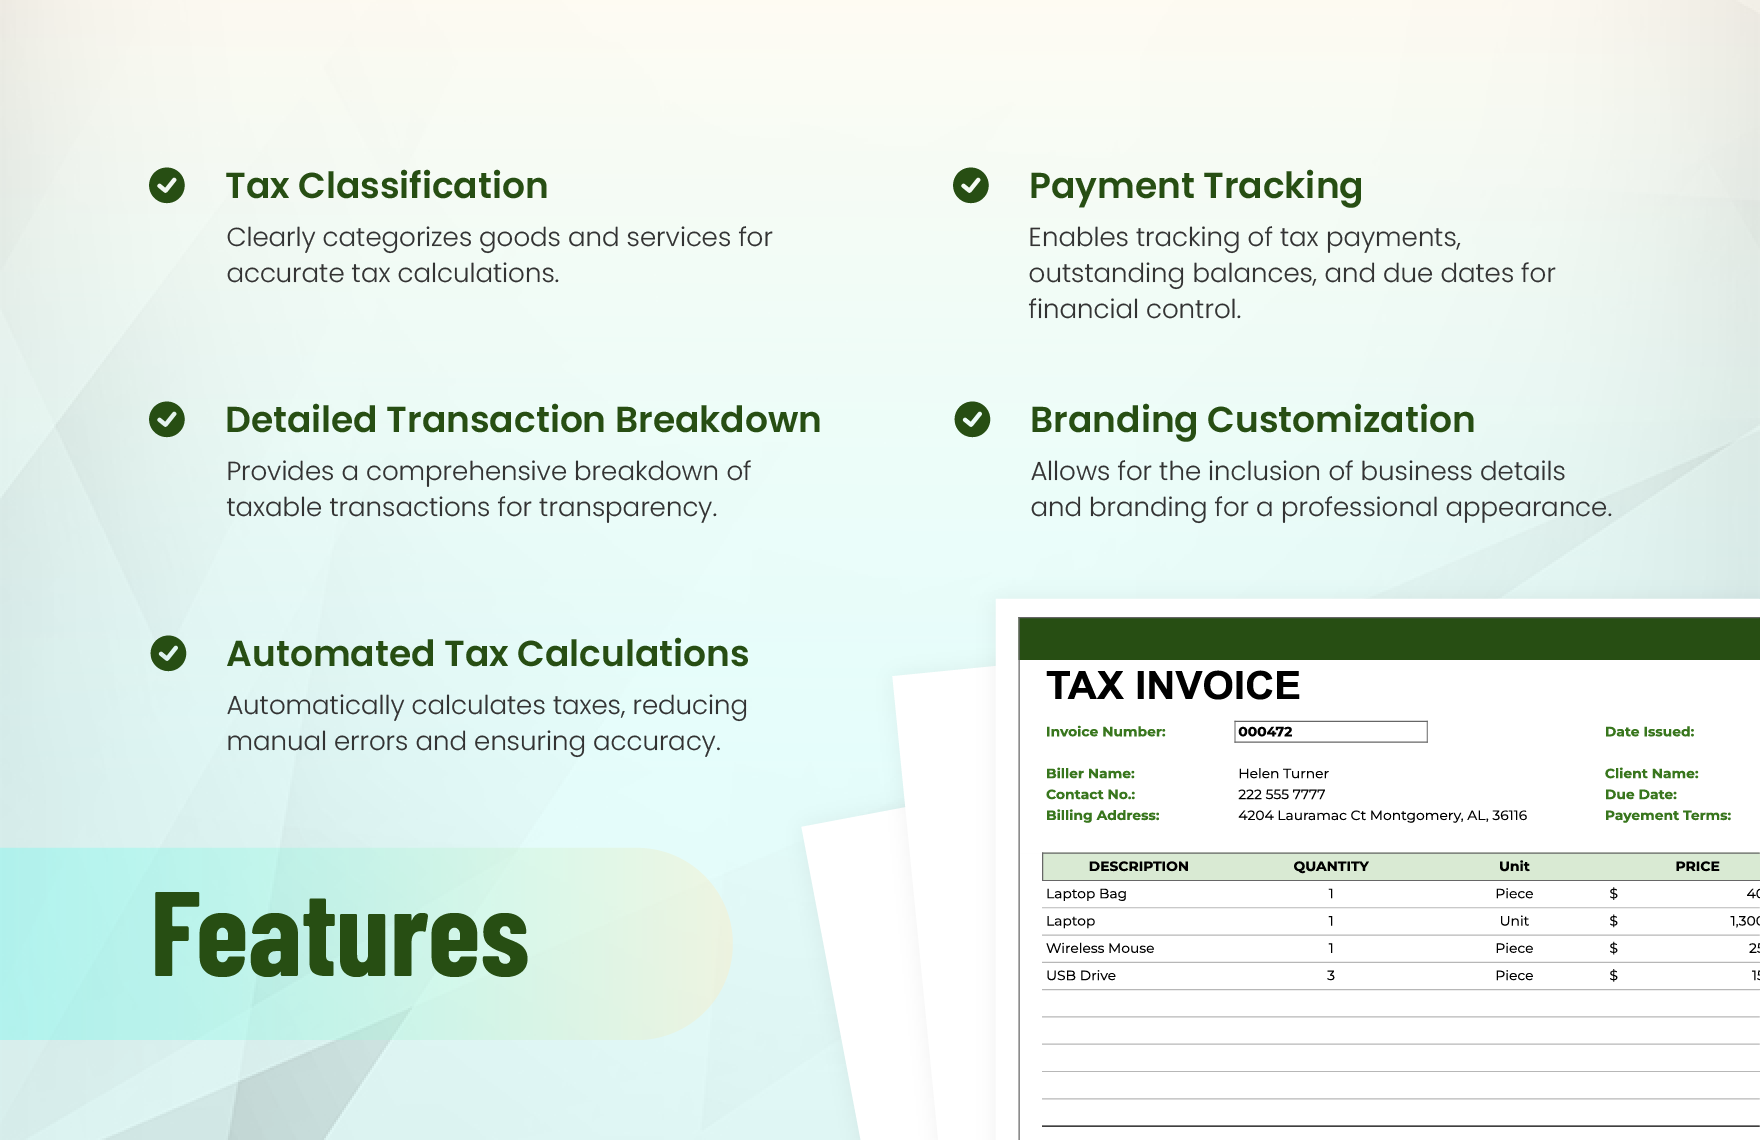 Tax Invoice Format